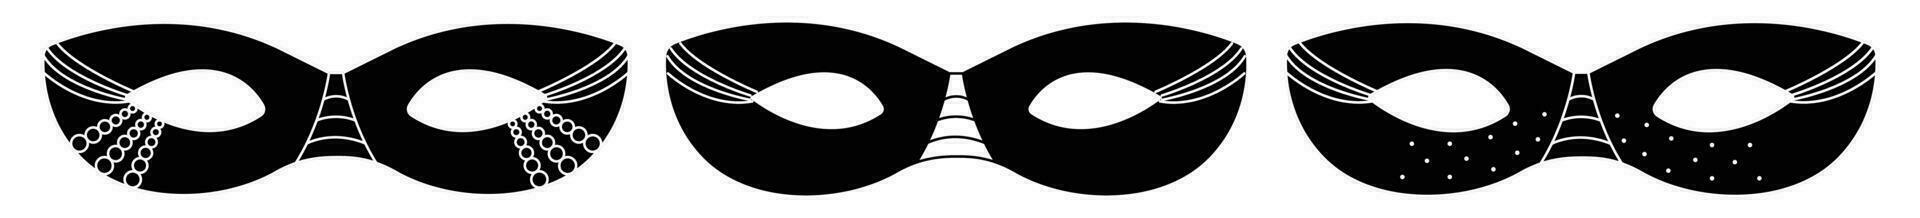 Black and white masquerade masks set, three monochrome vector illustrations